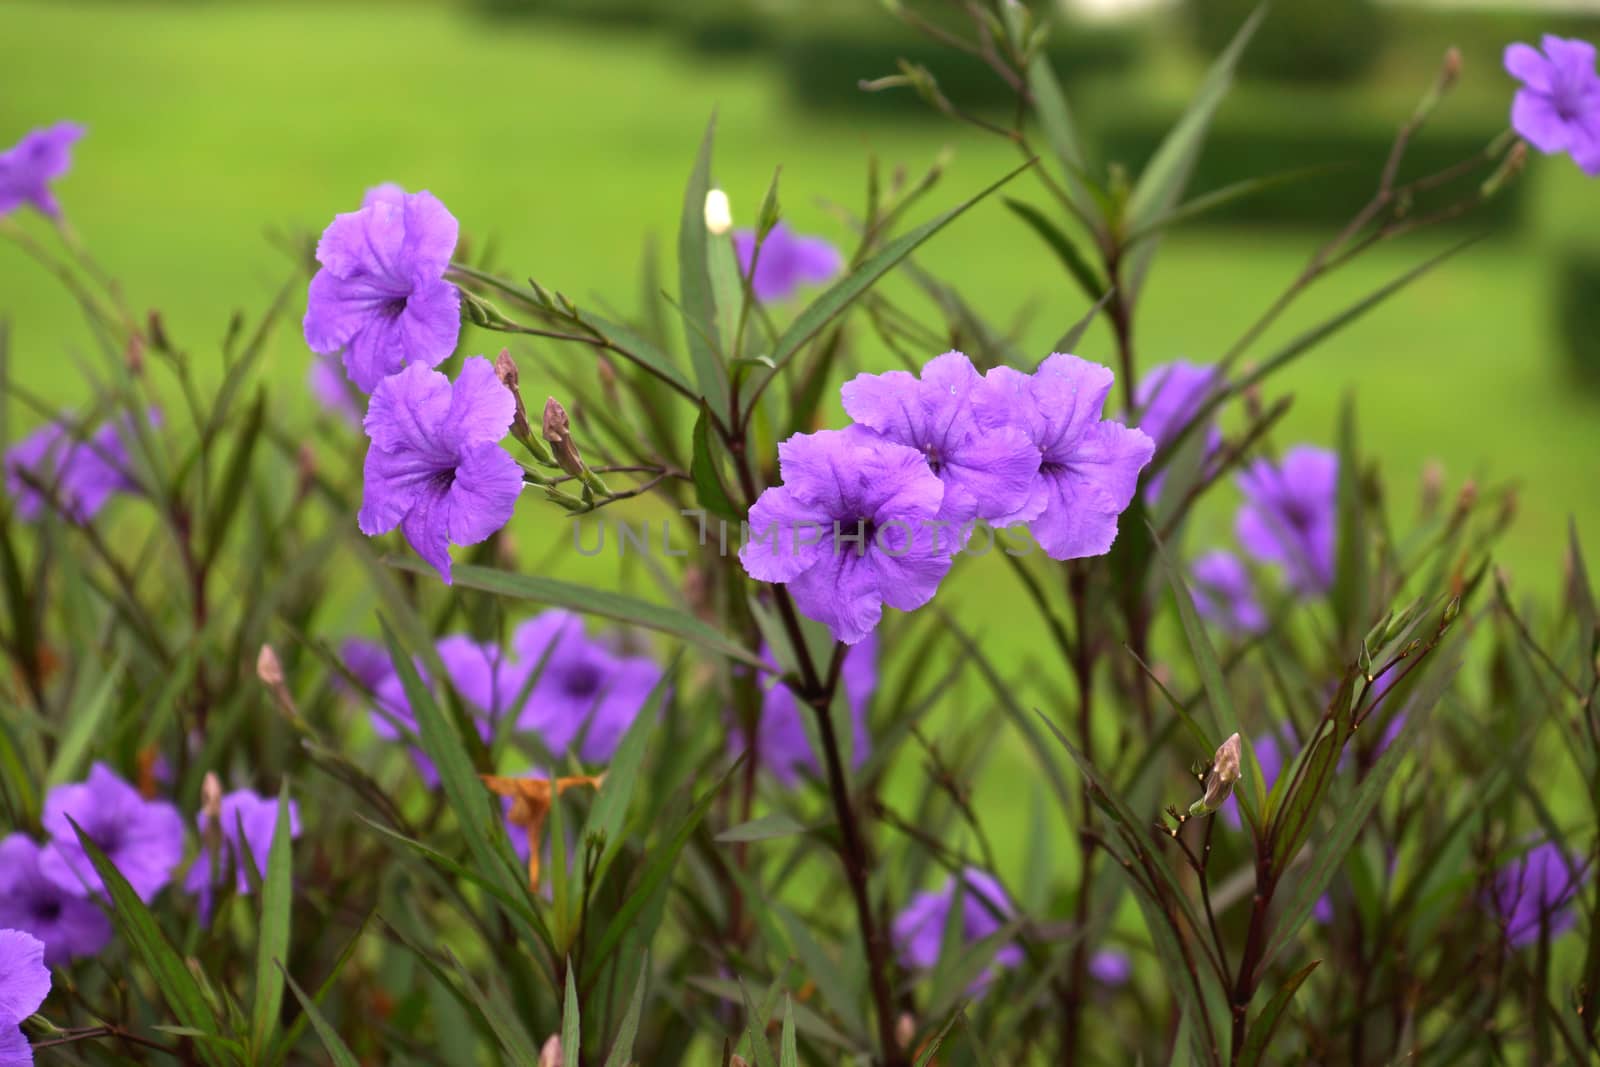 Purple flowers in the garden by Noppharat_th